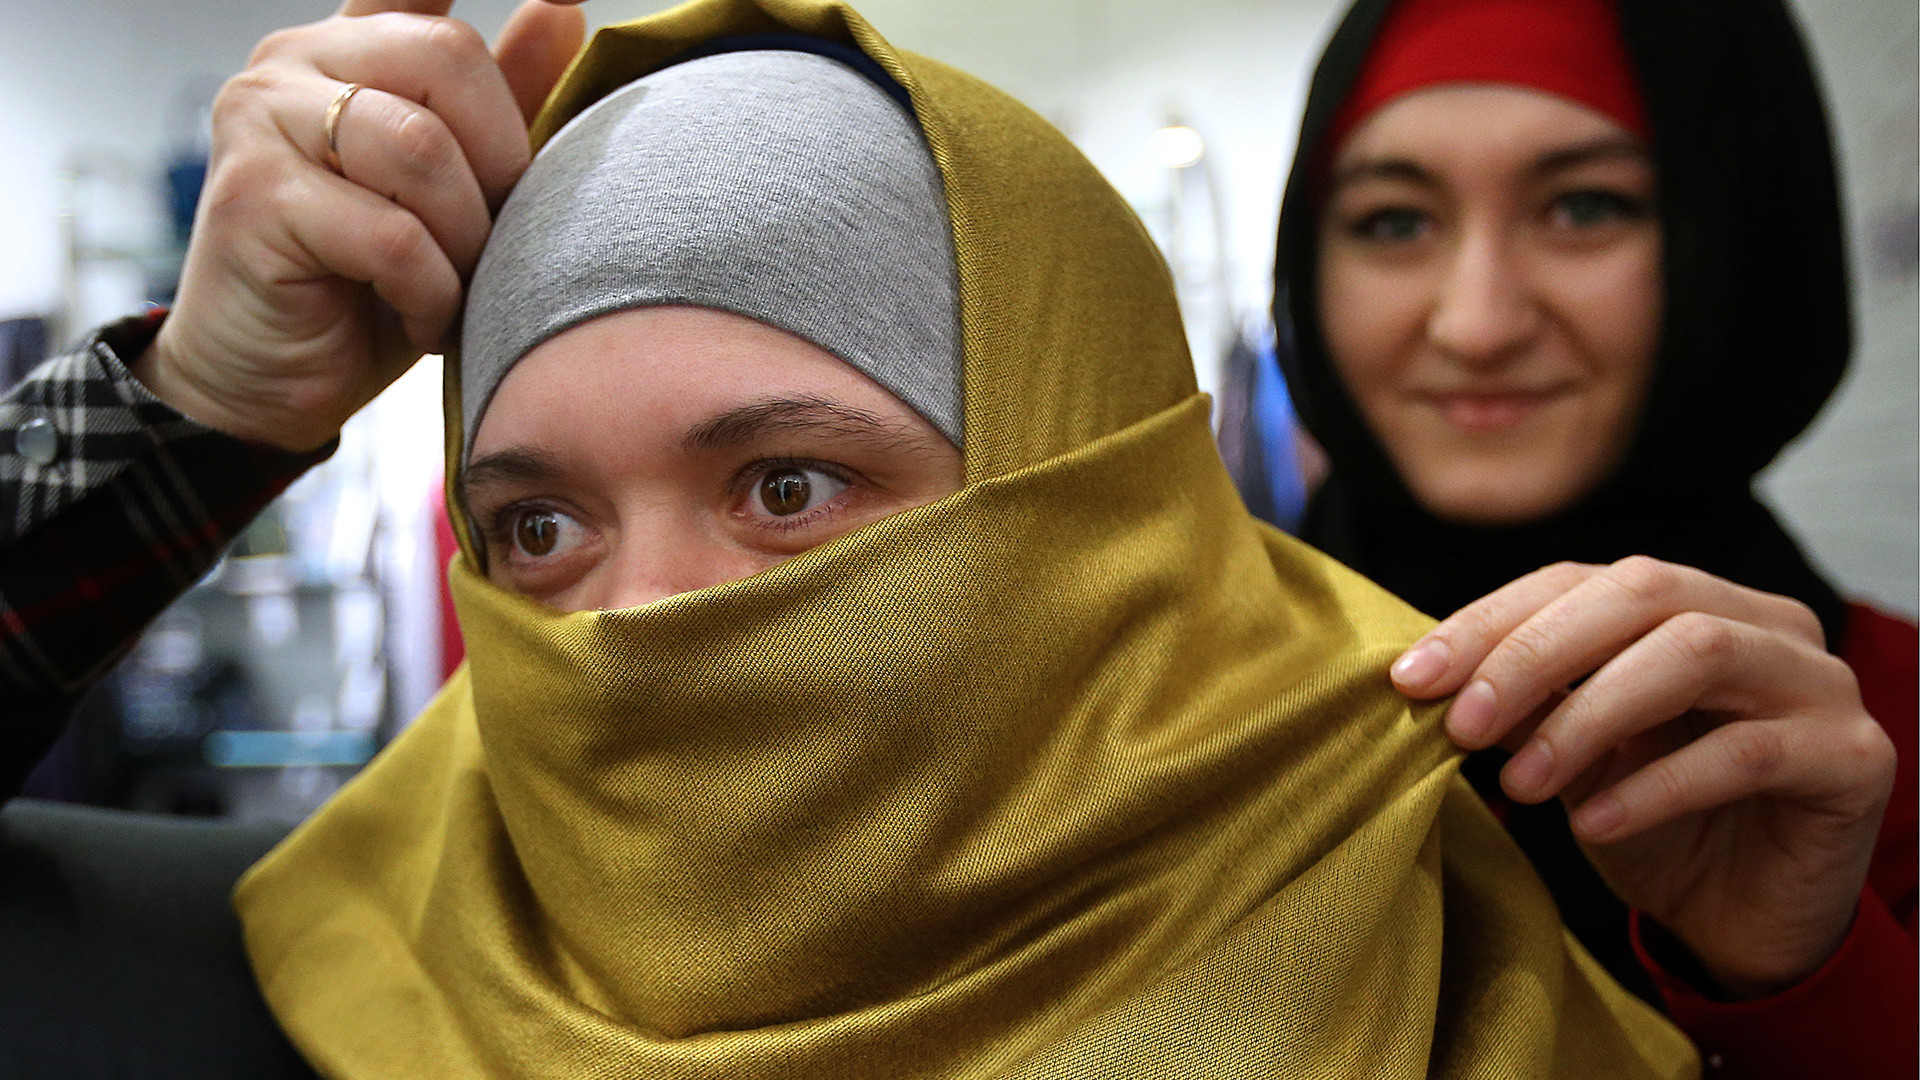 Seorang perempuan tengah memilih jilbab di pusat perbelanjaan Moskow.
